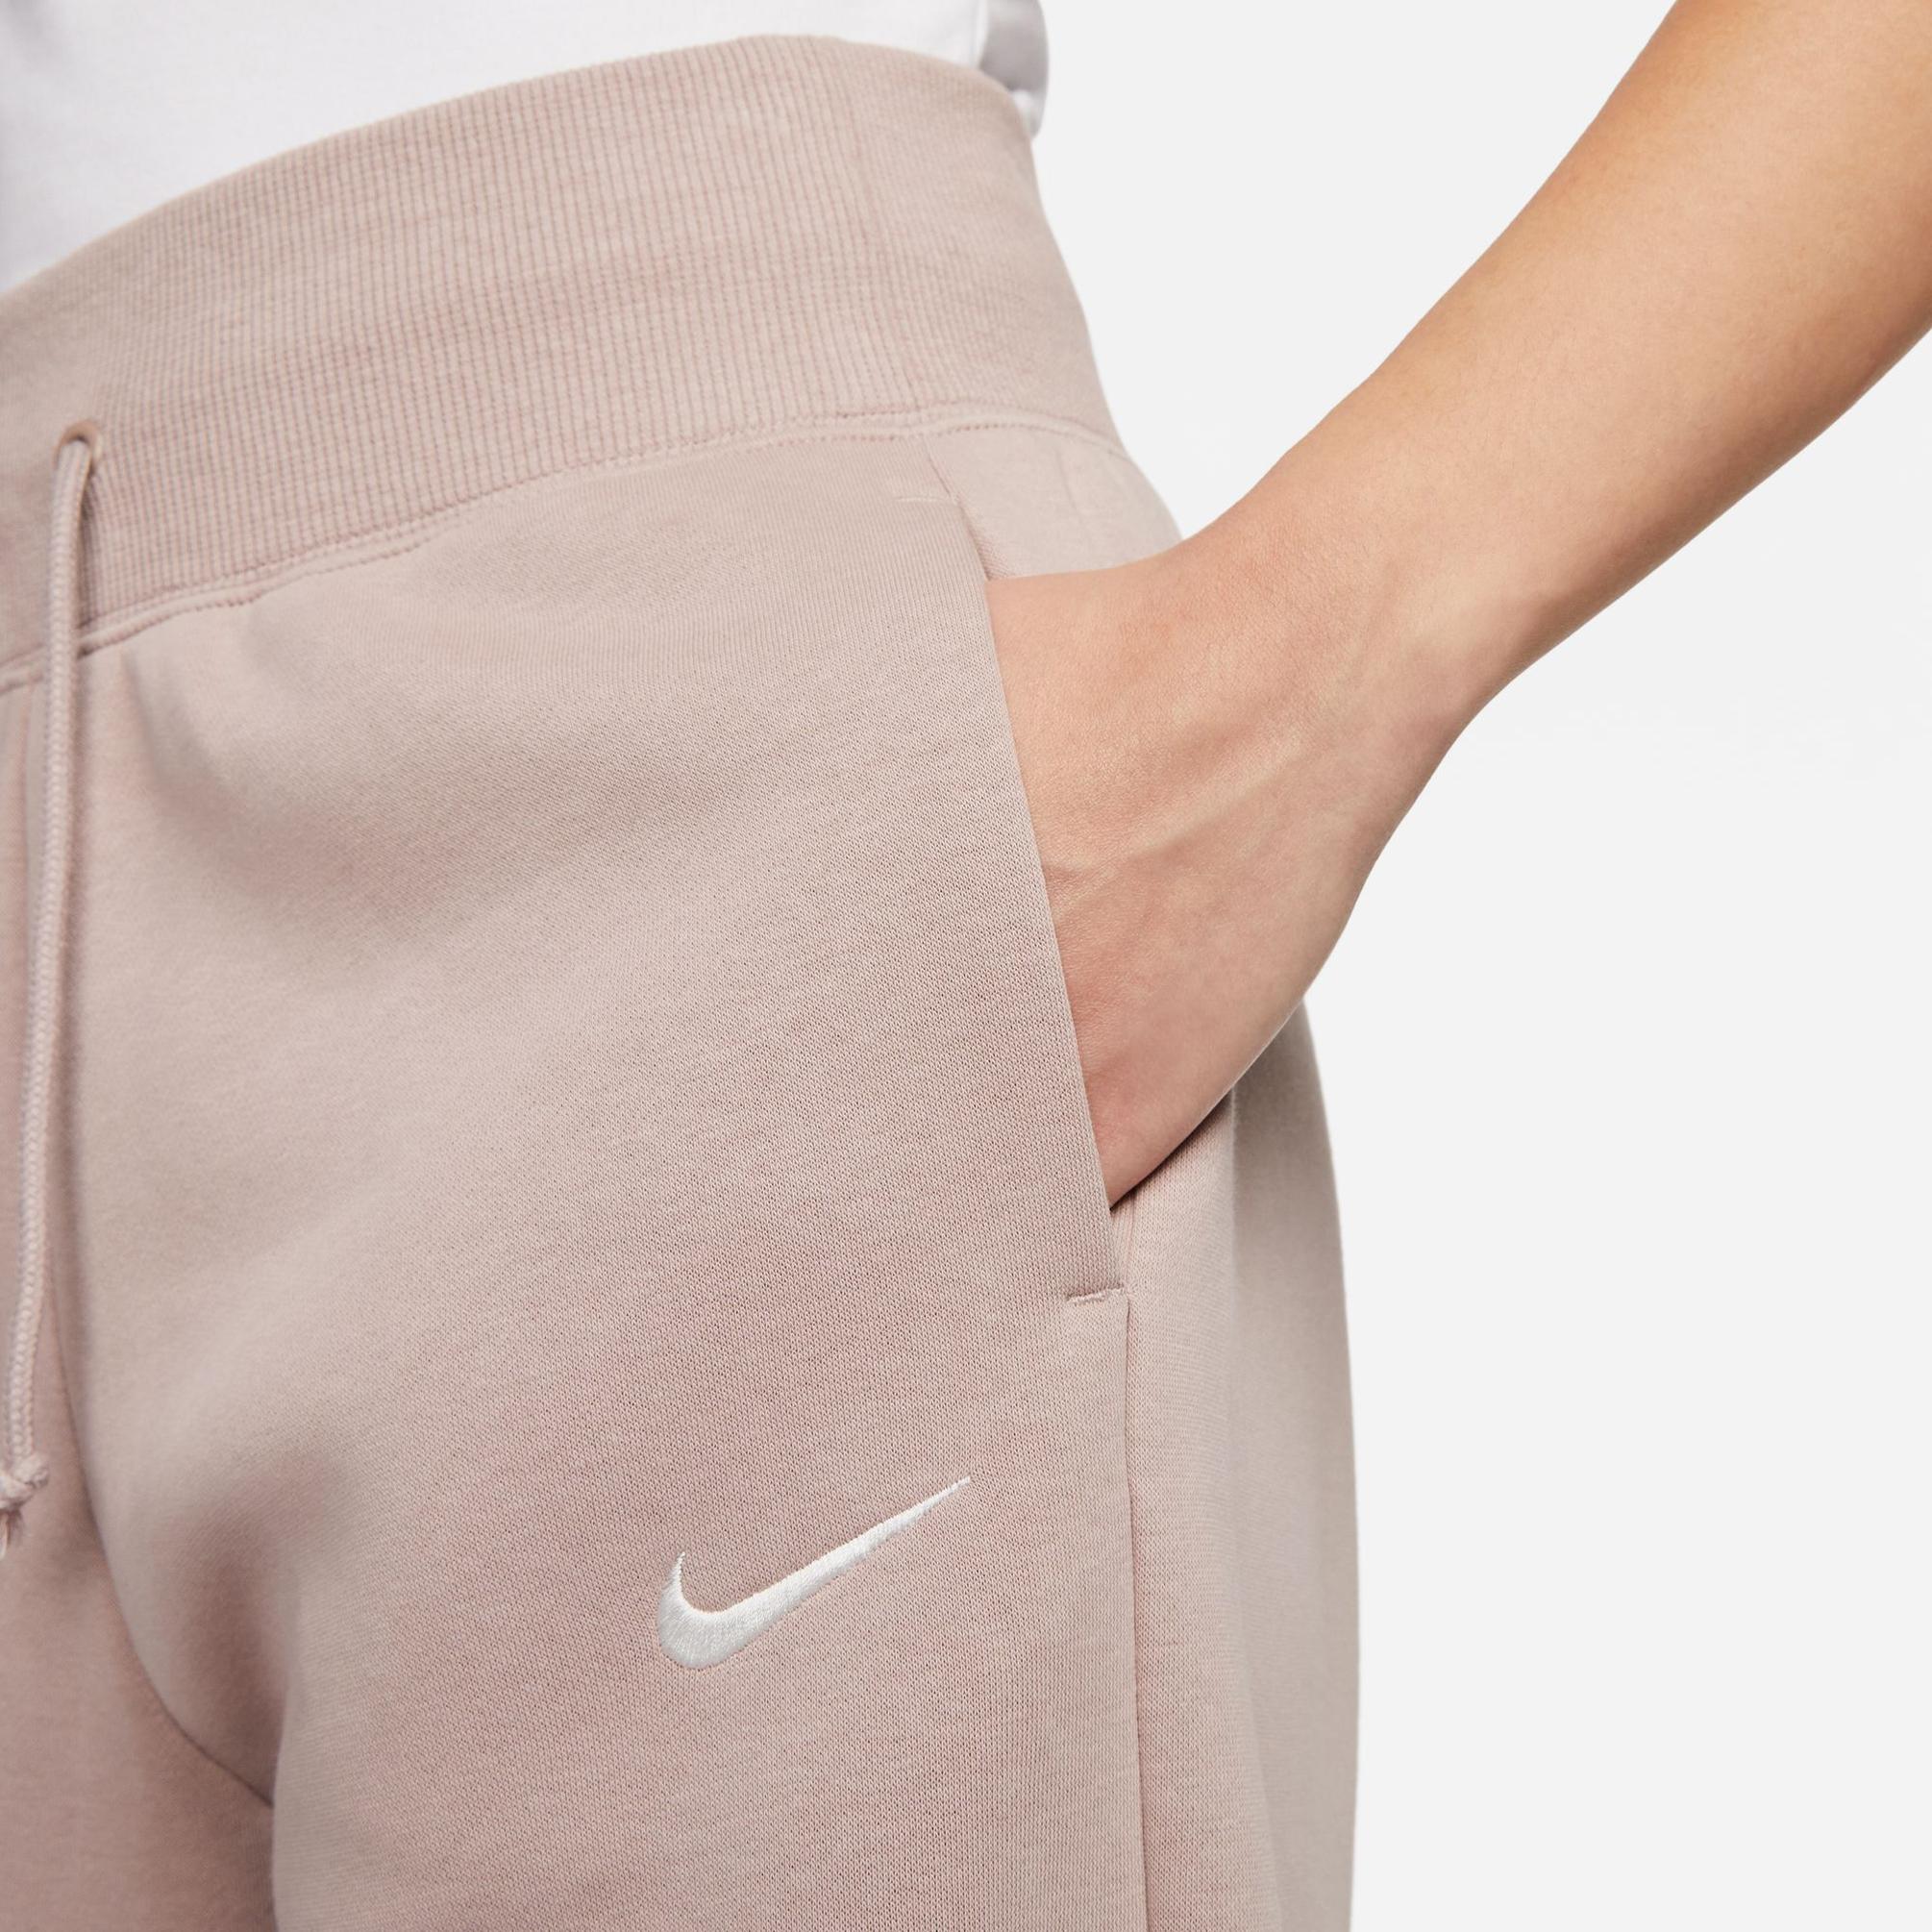  Nike Sportswear Phoenix Fleece High-Waisted Kadın Pembe Eşofman Altı